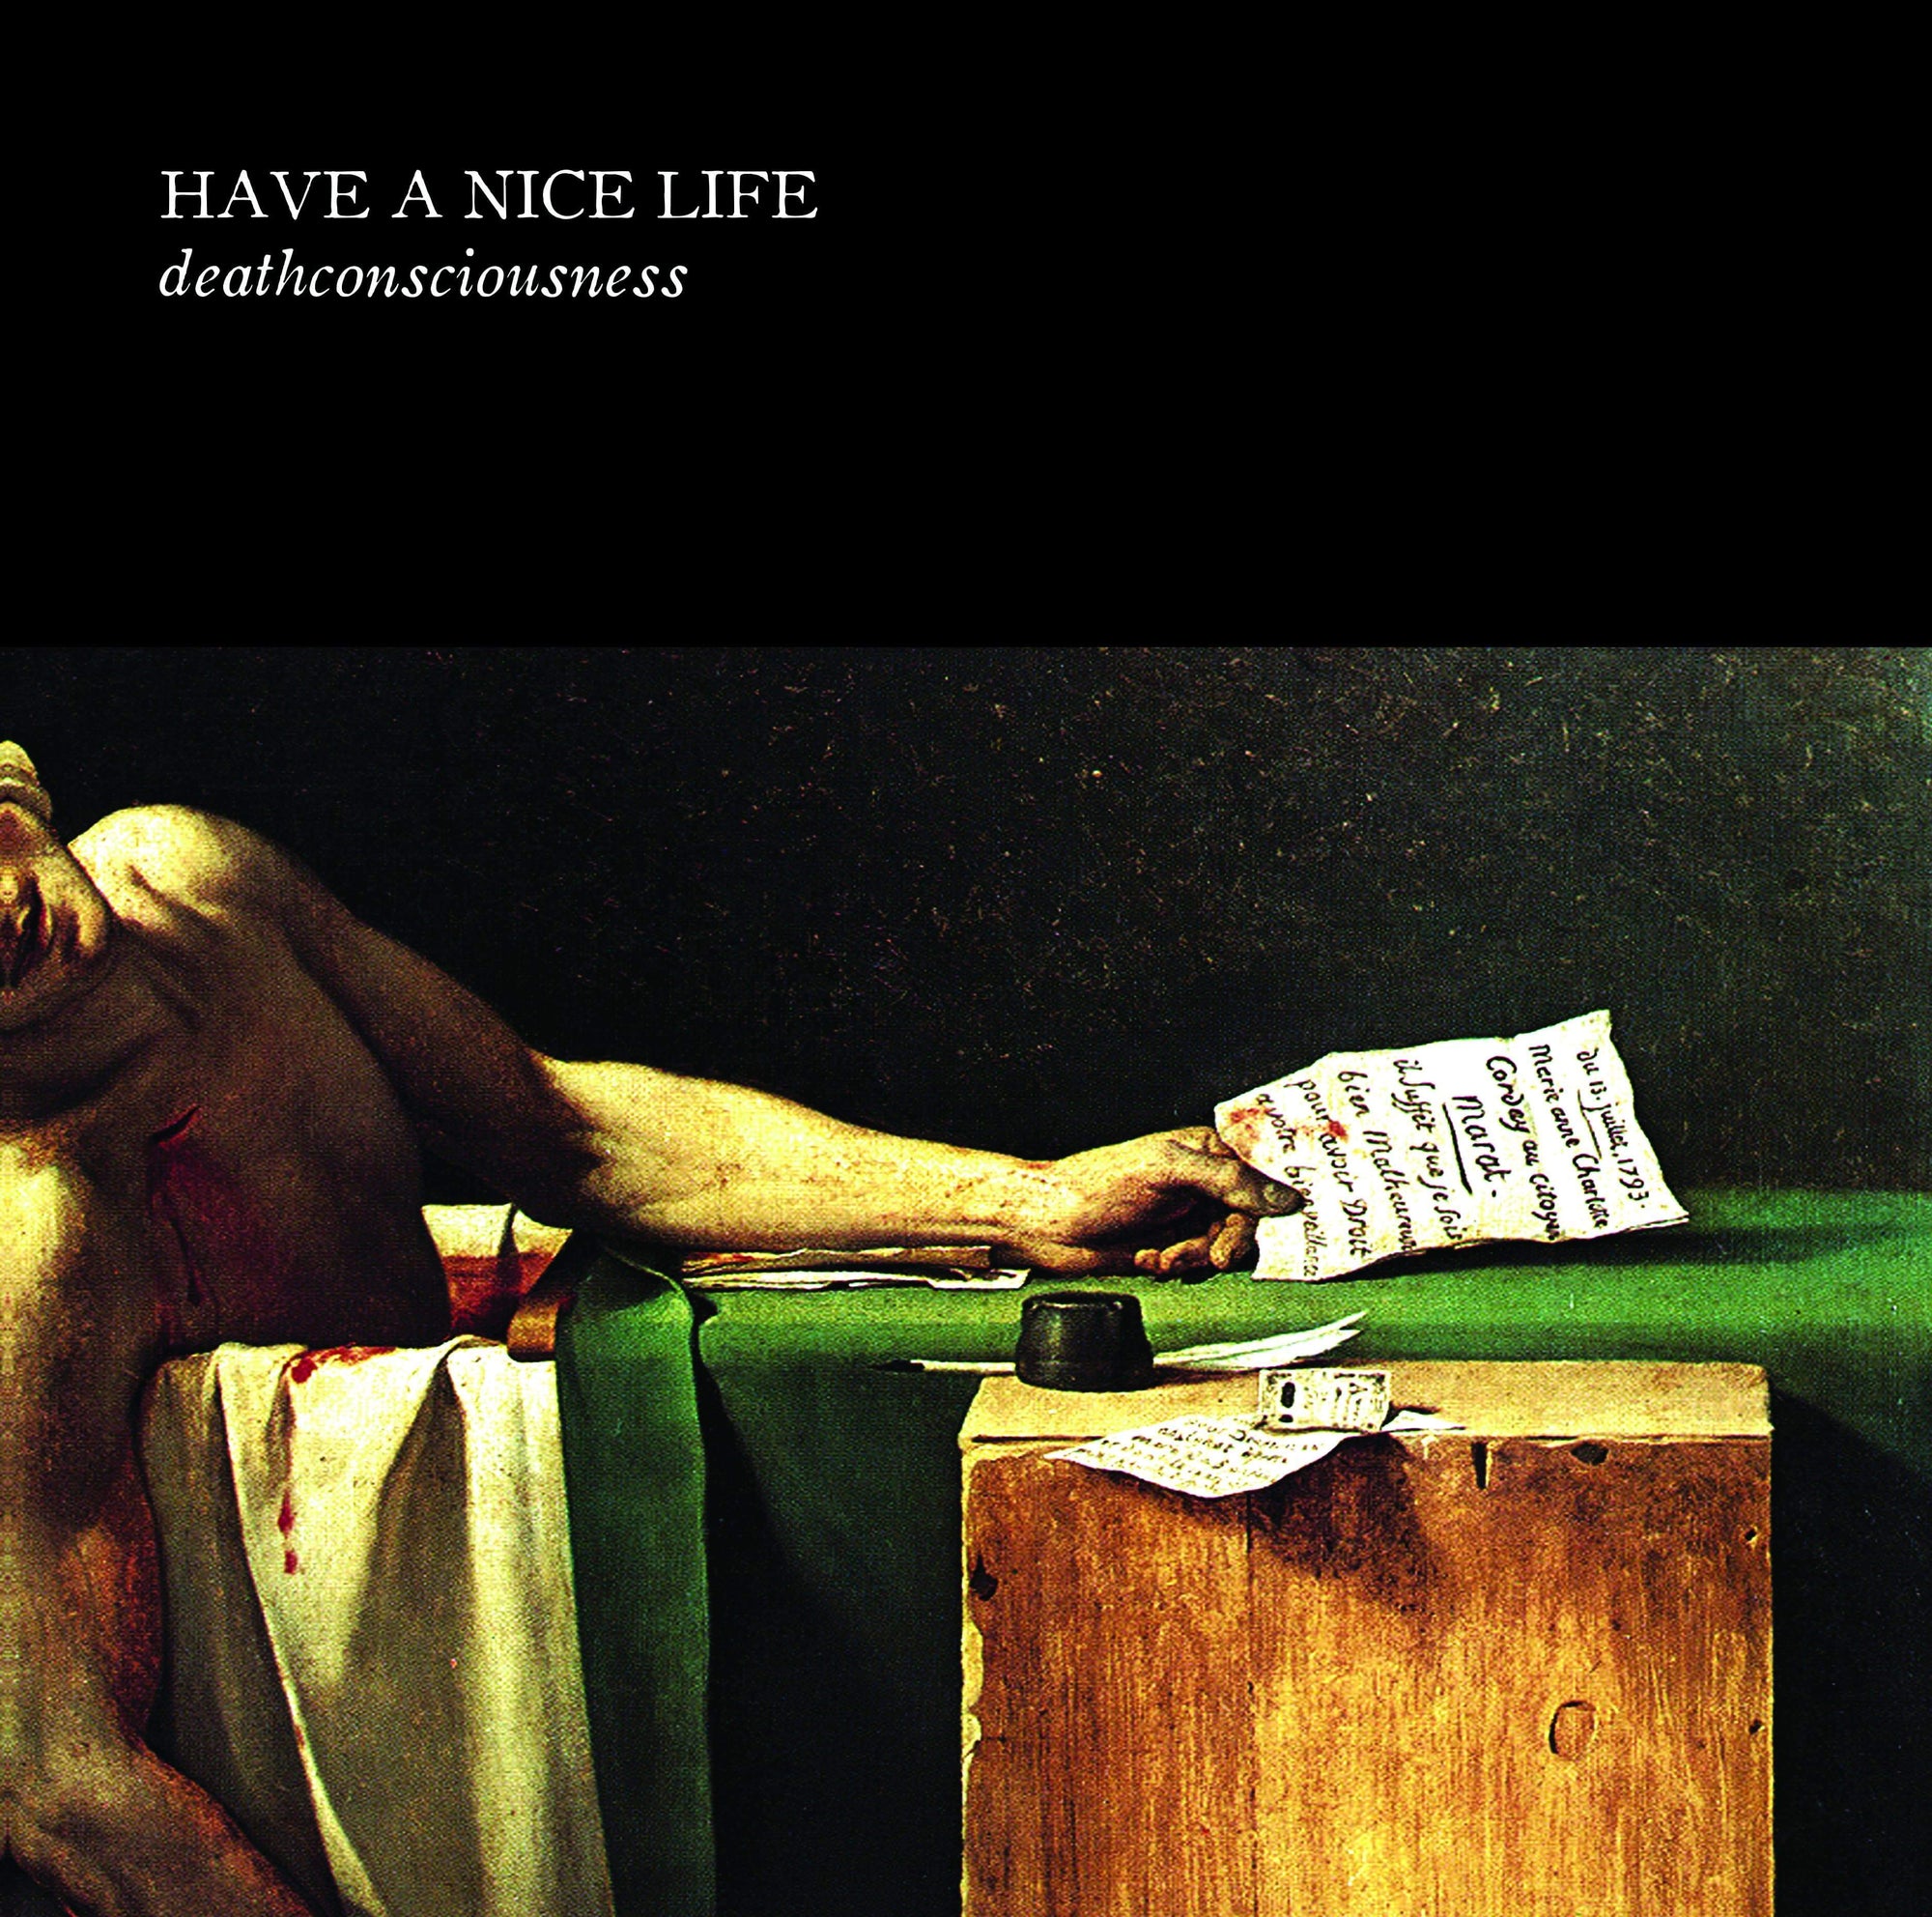 The Flenser CD 2CD Digipak Have a Nice Life "Deathconsciousness" CD Boxset (pre-order)